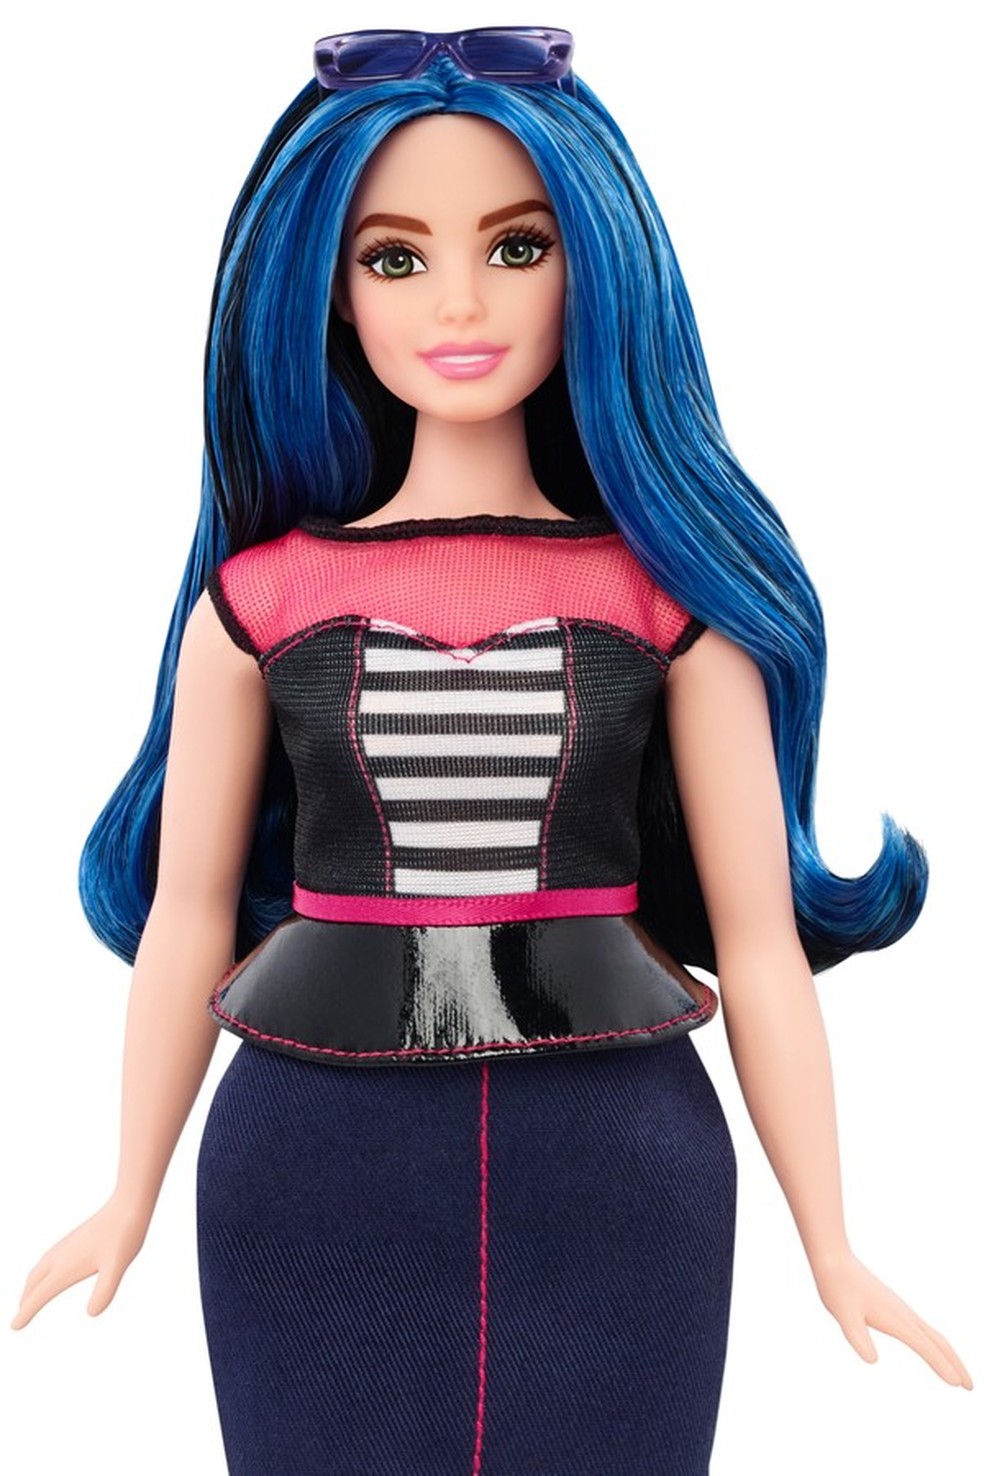 Barbie Gravida Elegante - jogos online de menina